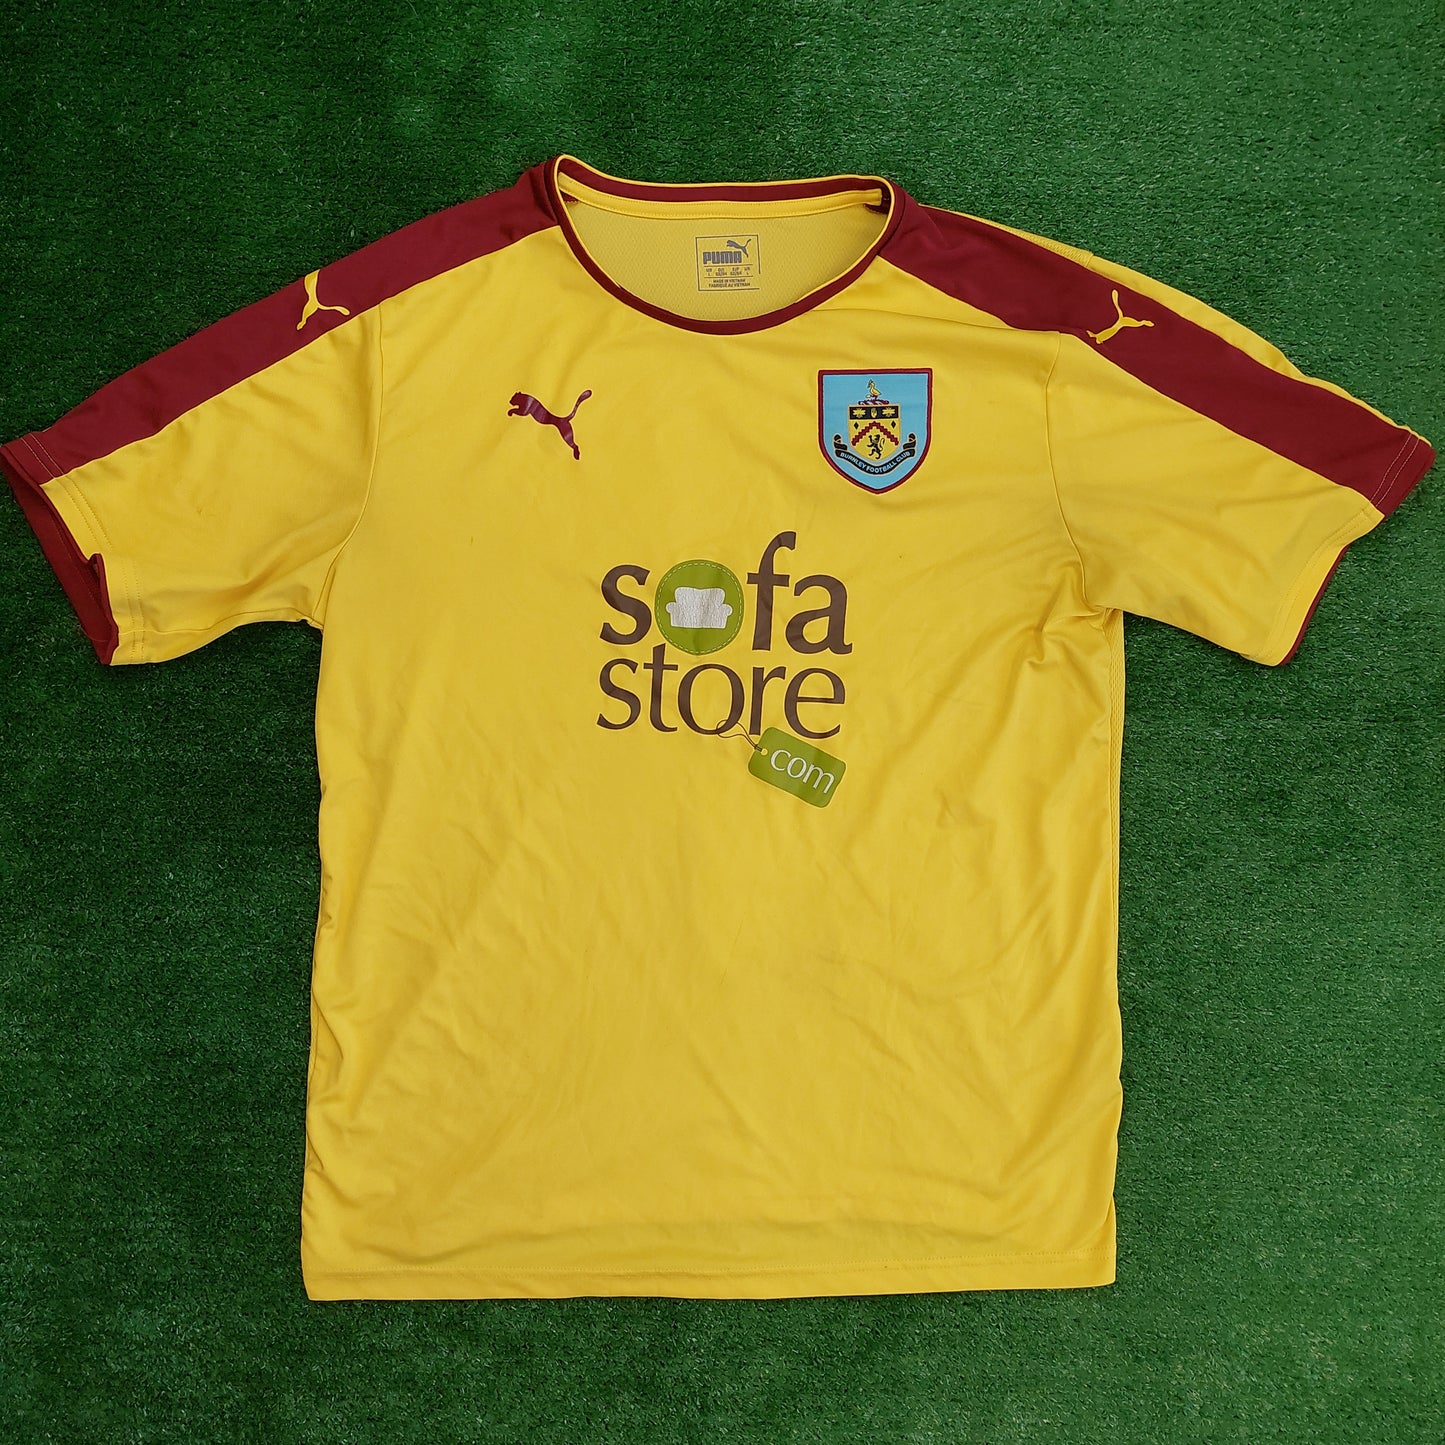 Burnley 2015/16 Away Shirt (Very Good) - Size L